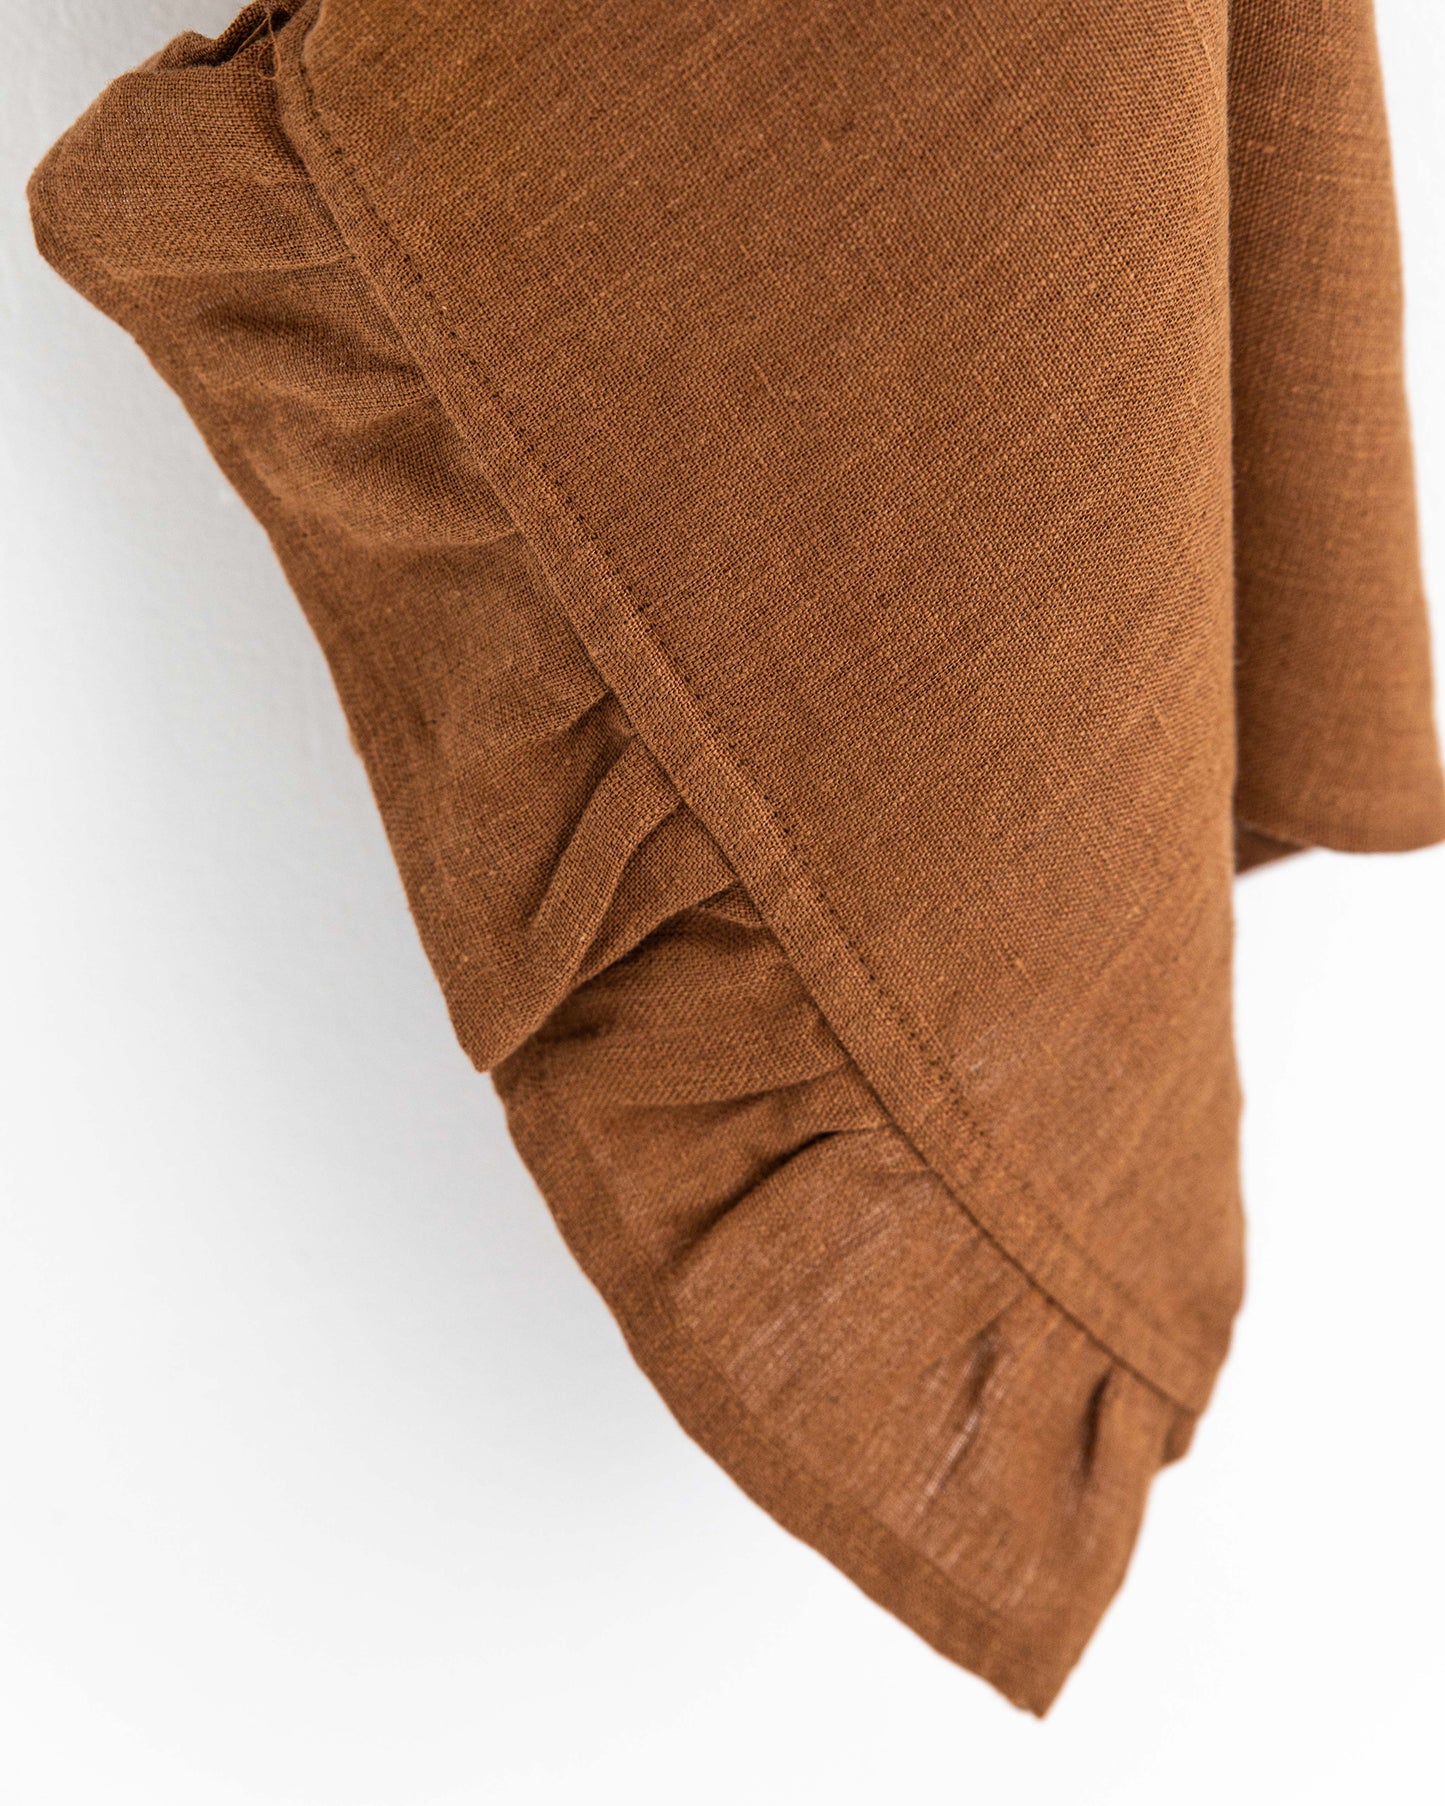 Ruffle trim linen tea towel in Cinnamon - MagicLinen